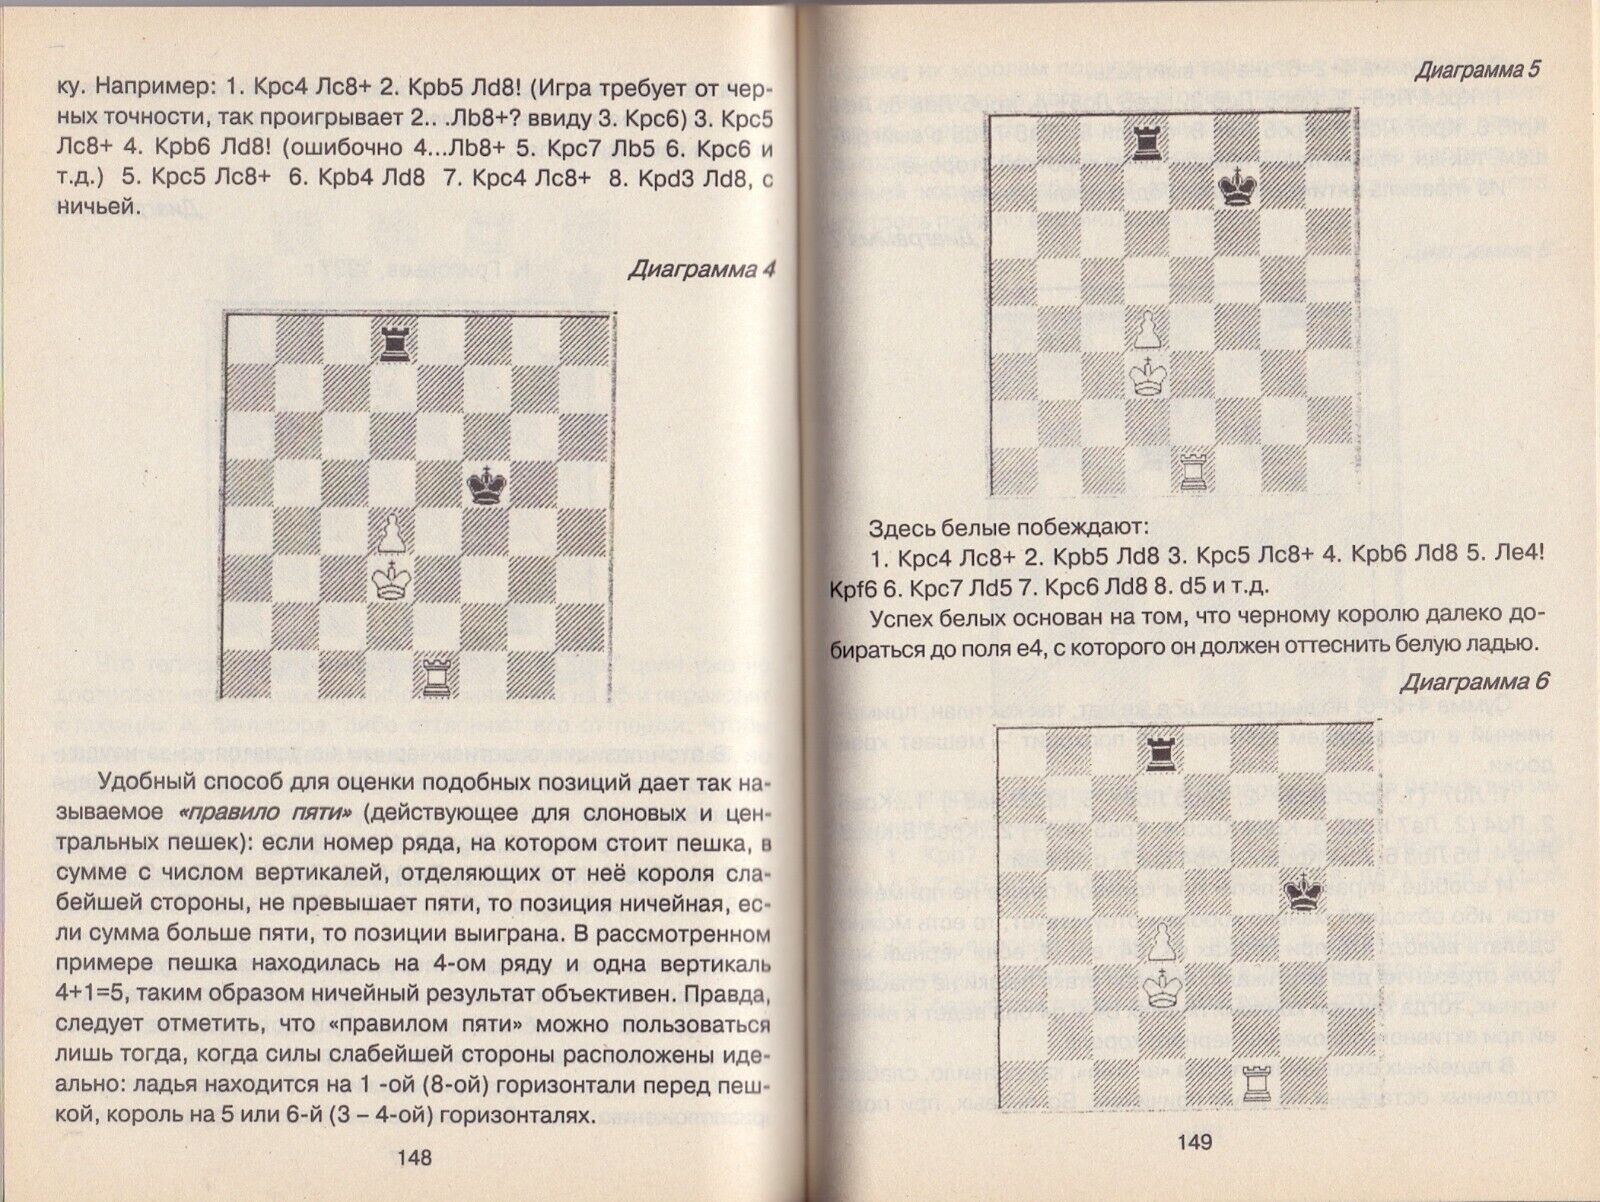 11509.Russian Chess Book: By the Puls of the Chess Game. V. Murashko. 2007 Kiev